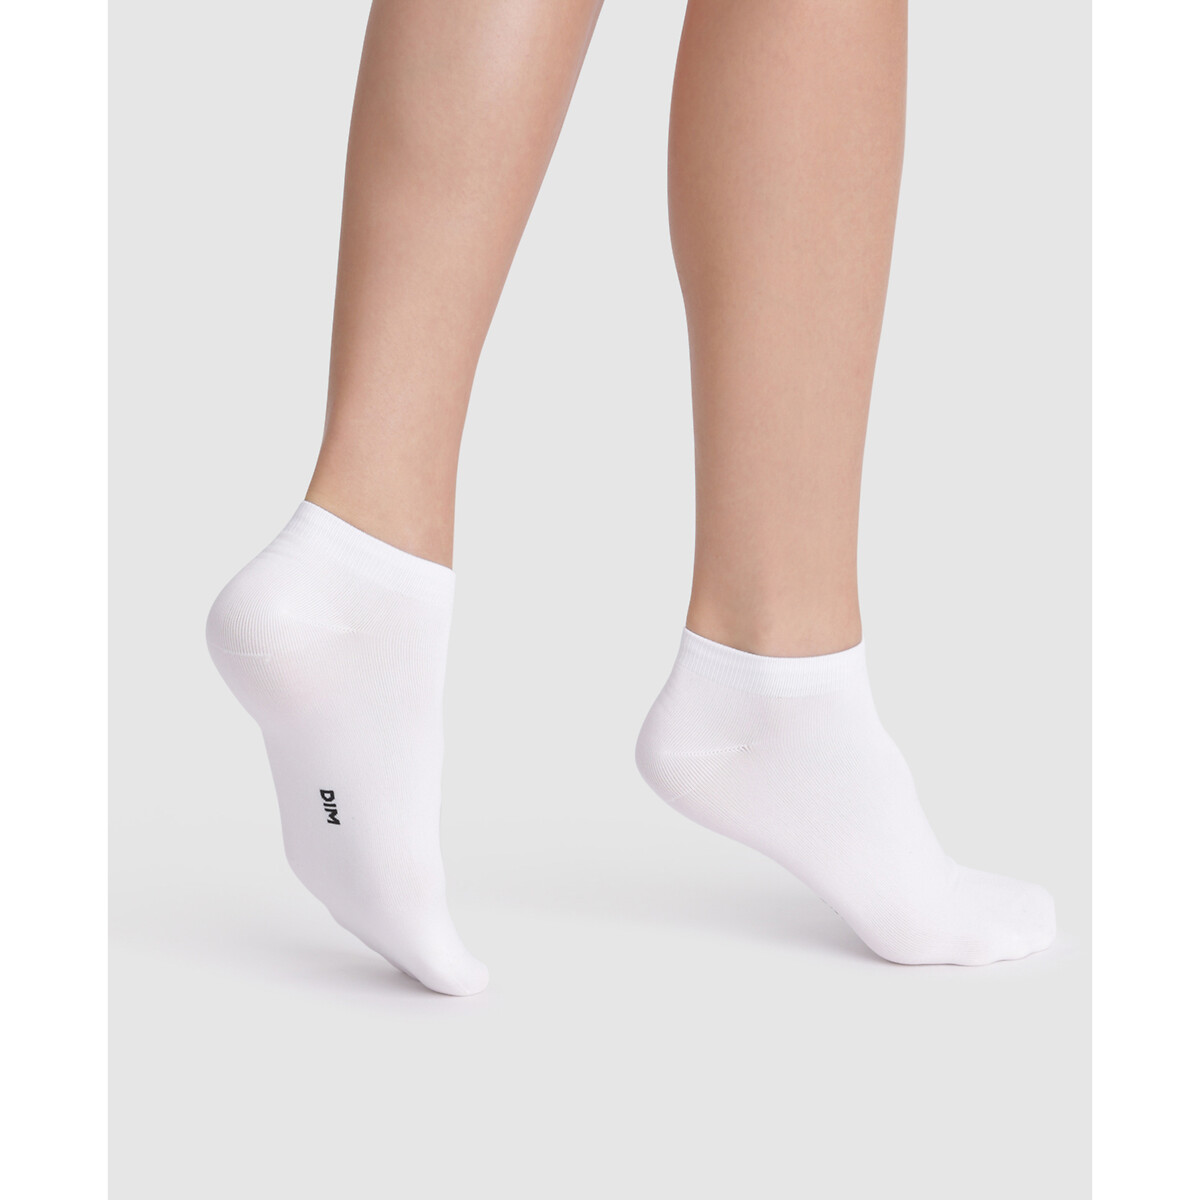 Image of Pack of 2 Pairs of Skin Trainer Socks